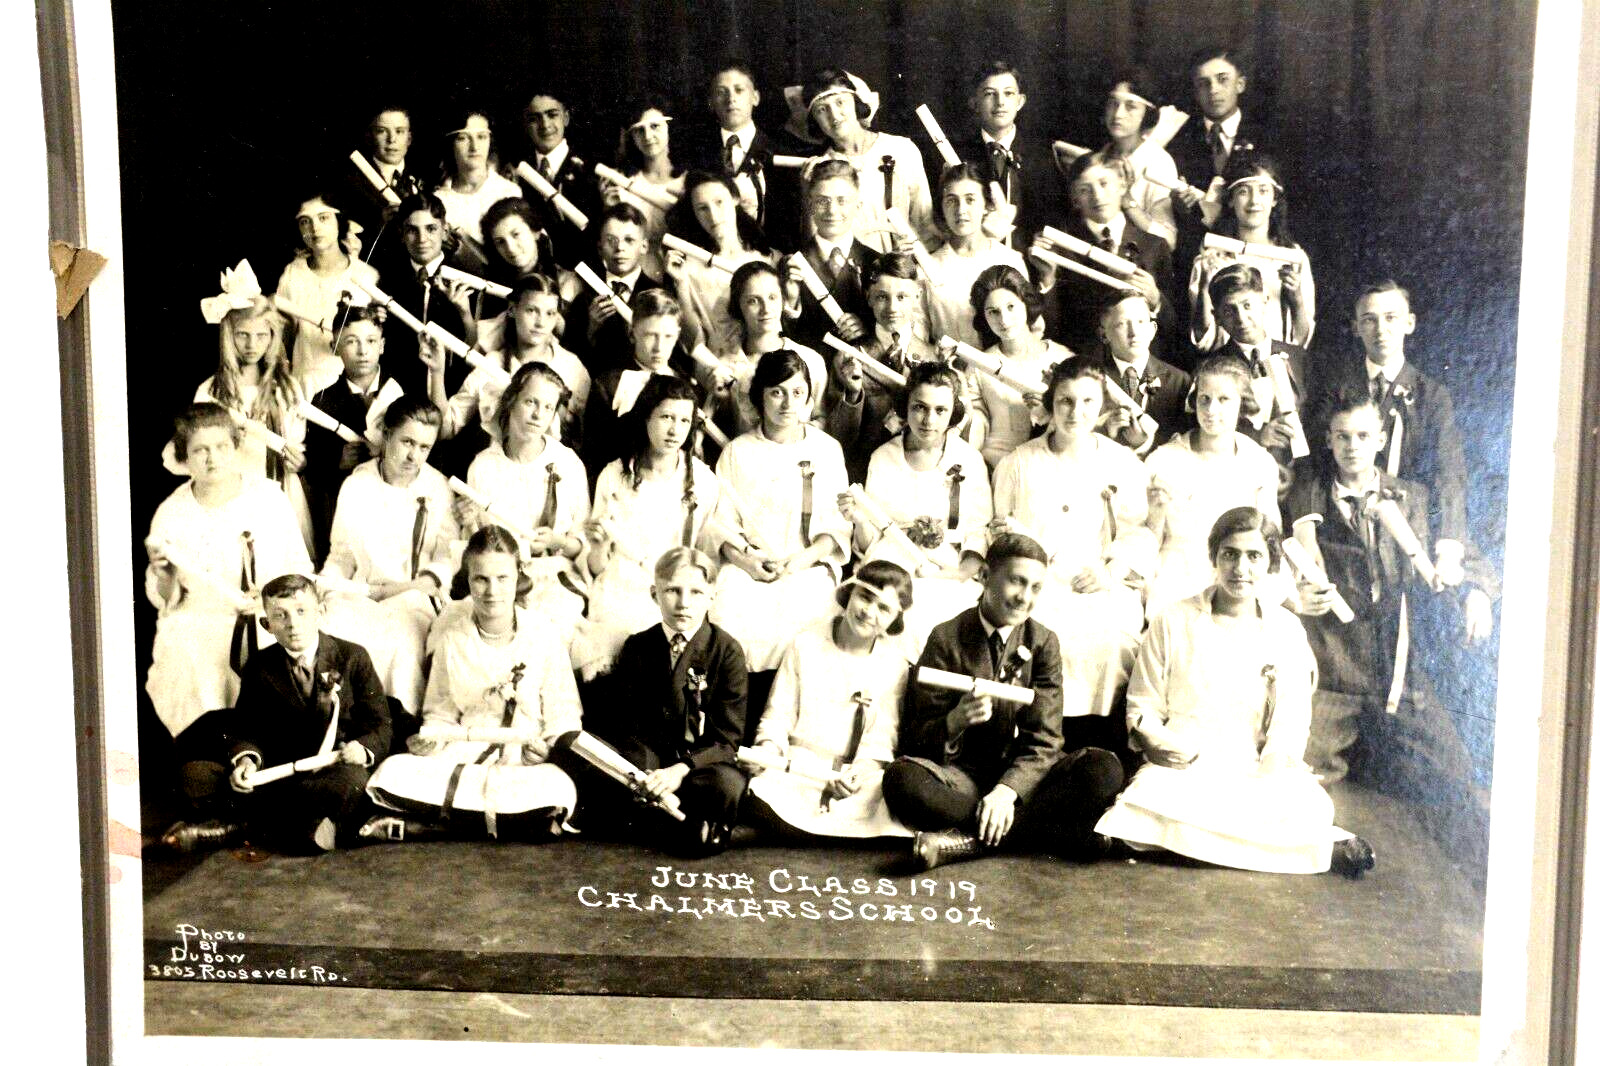 Estelle Graduates  Chalmers School June Class 1919 Cabinet Card Photo 8 x 10